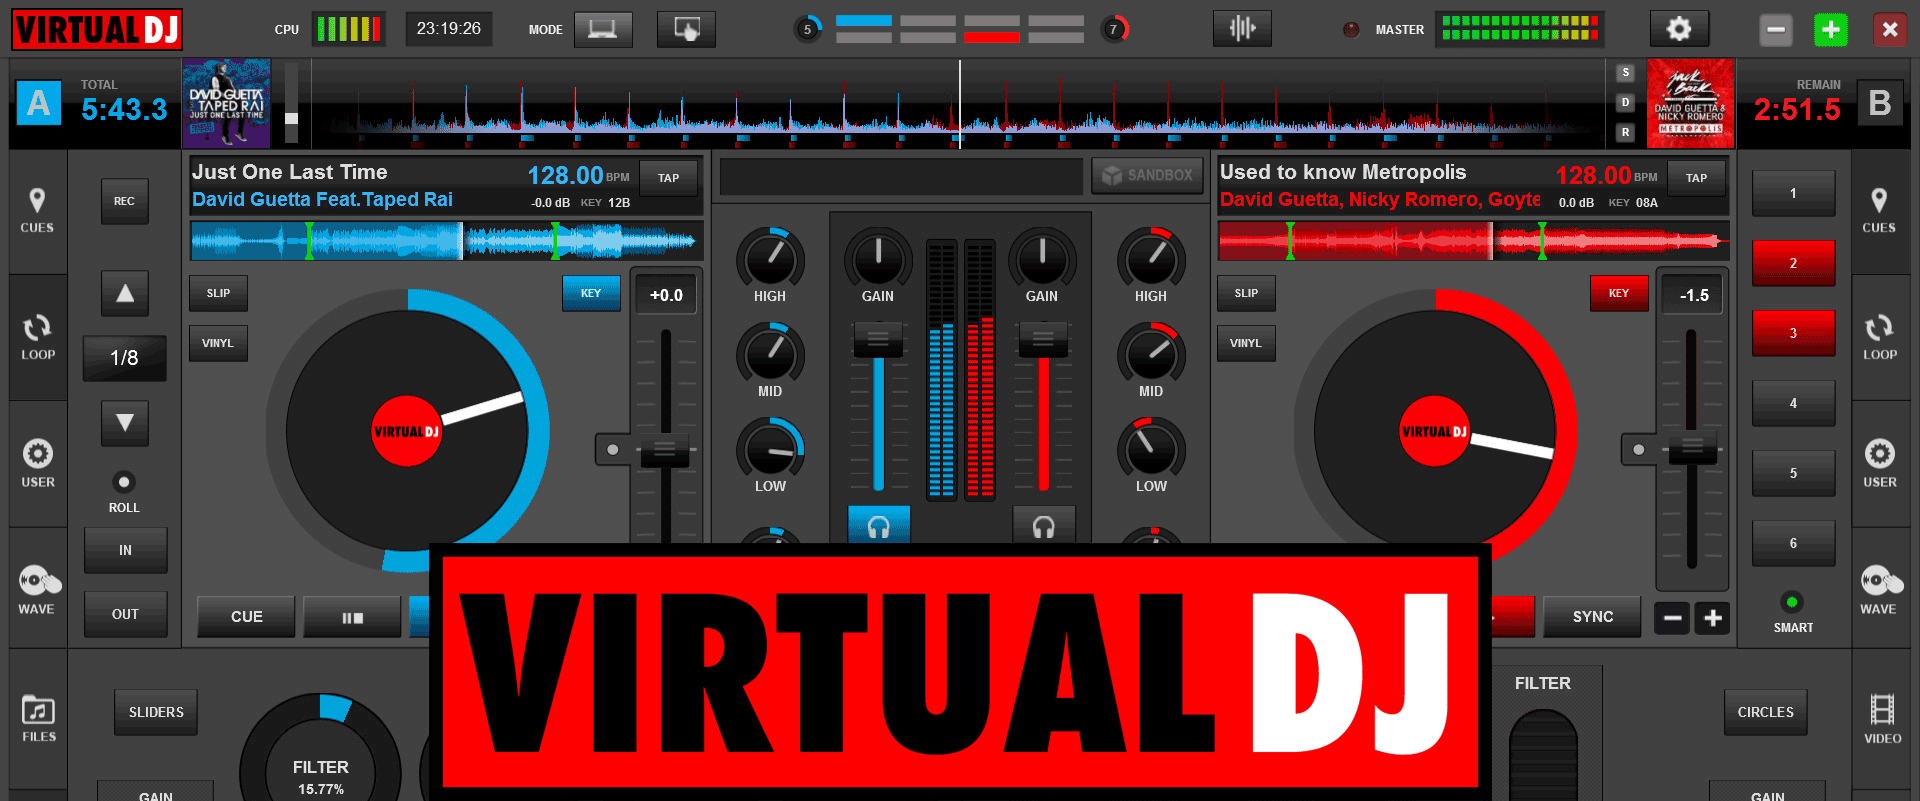 virtual dj mixer software